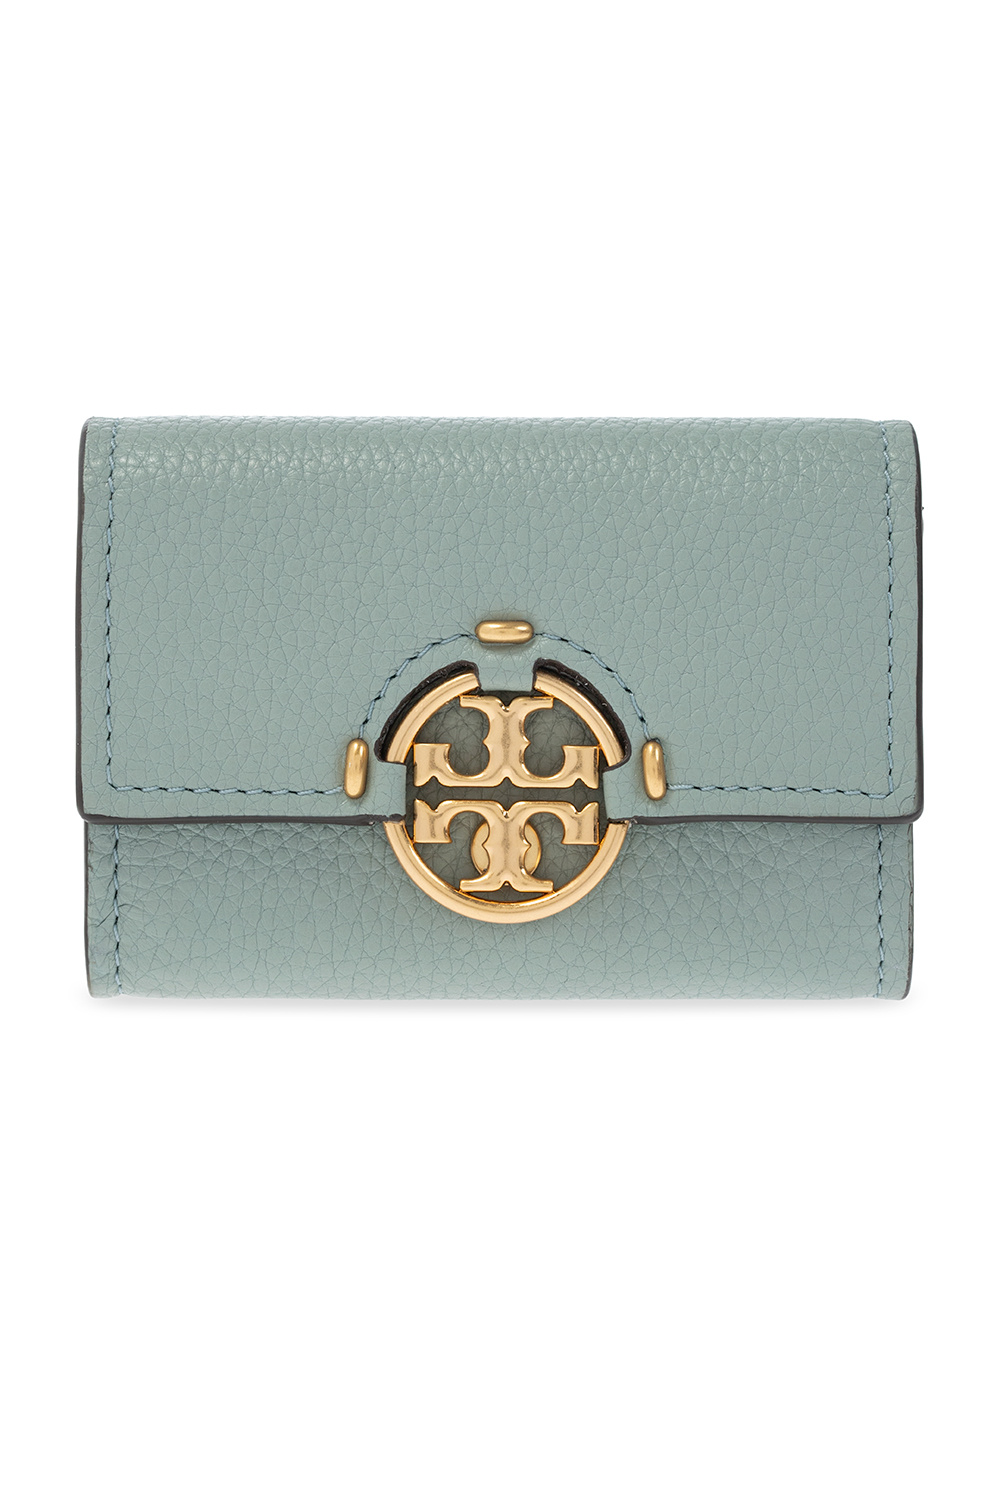 Tory Burch Leather wallet | Women's Accessories | Vitkac